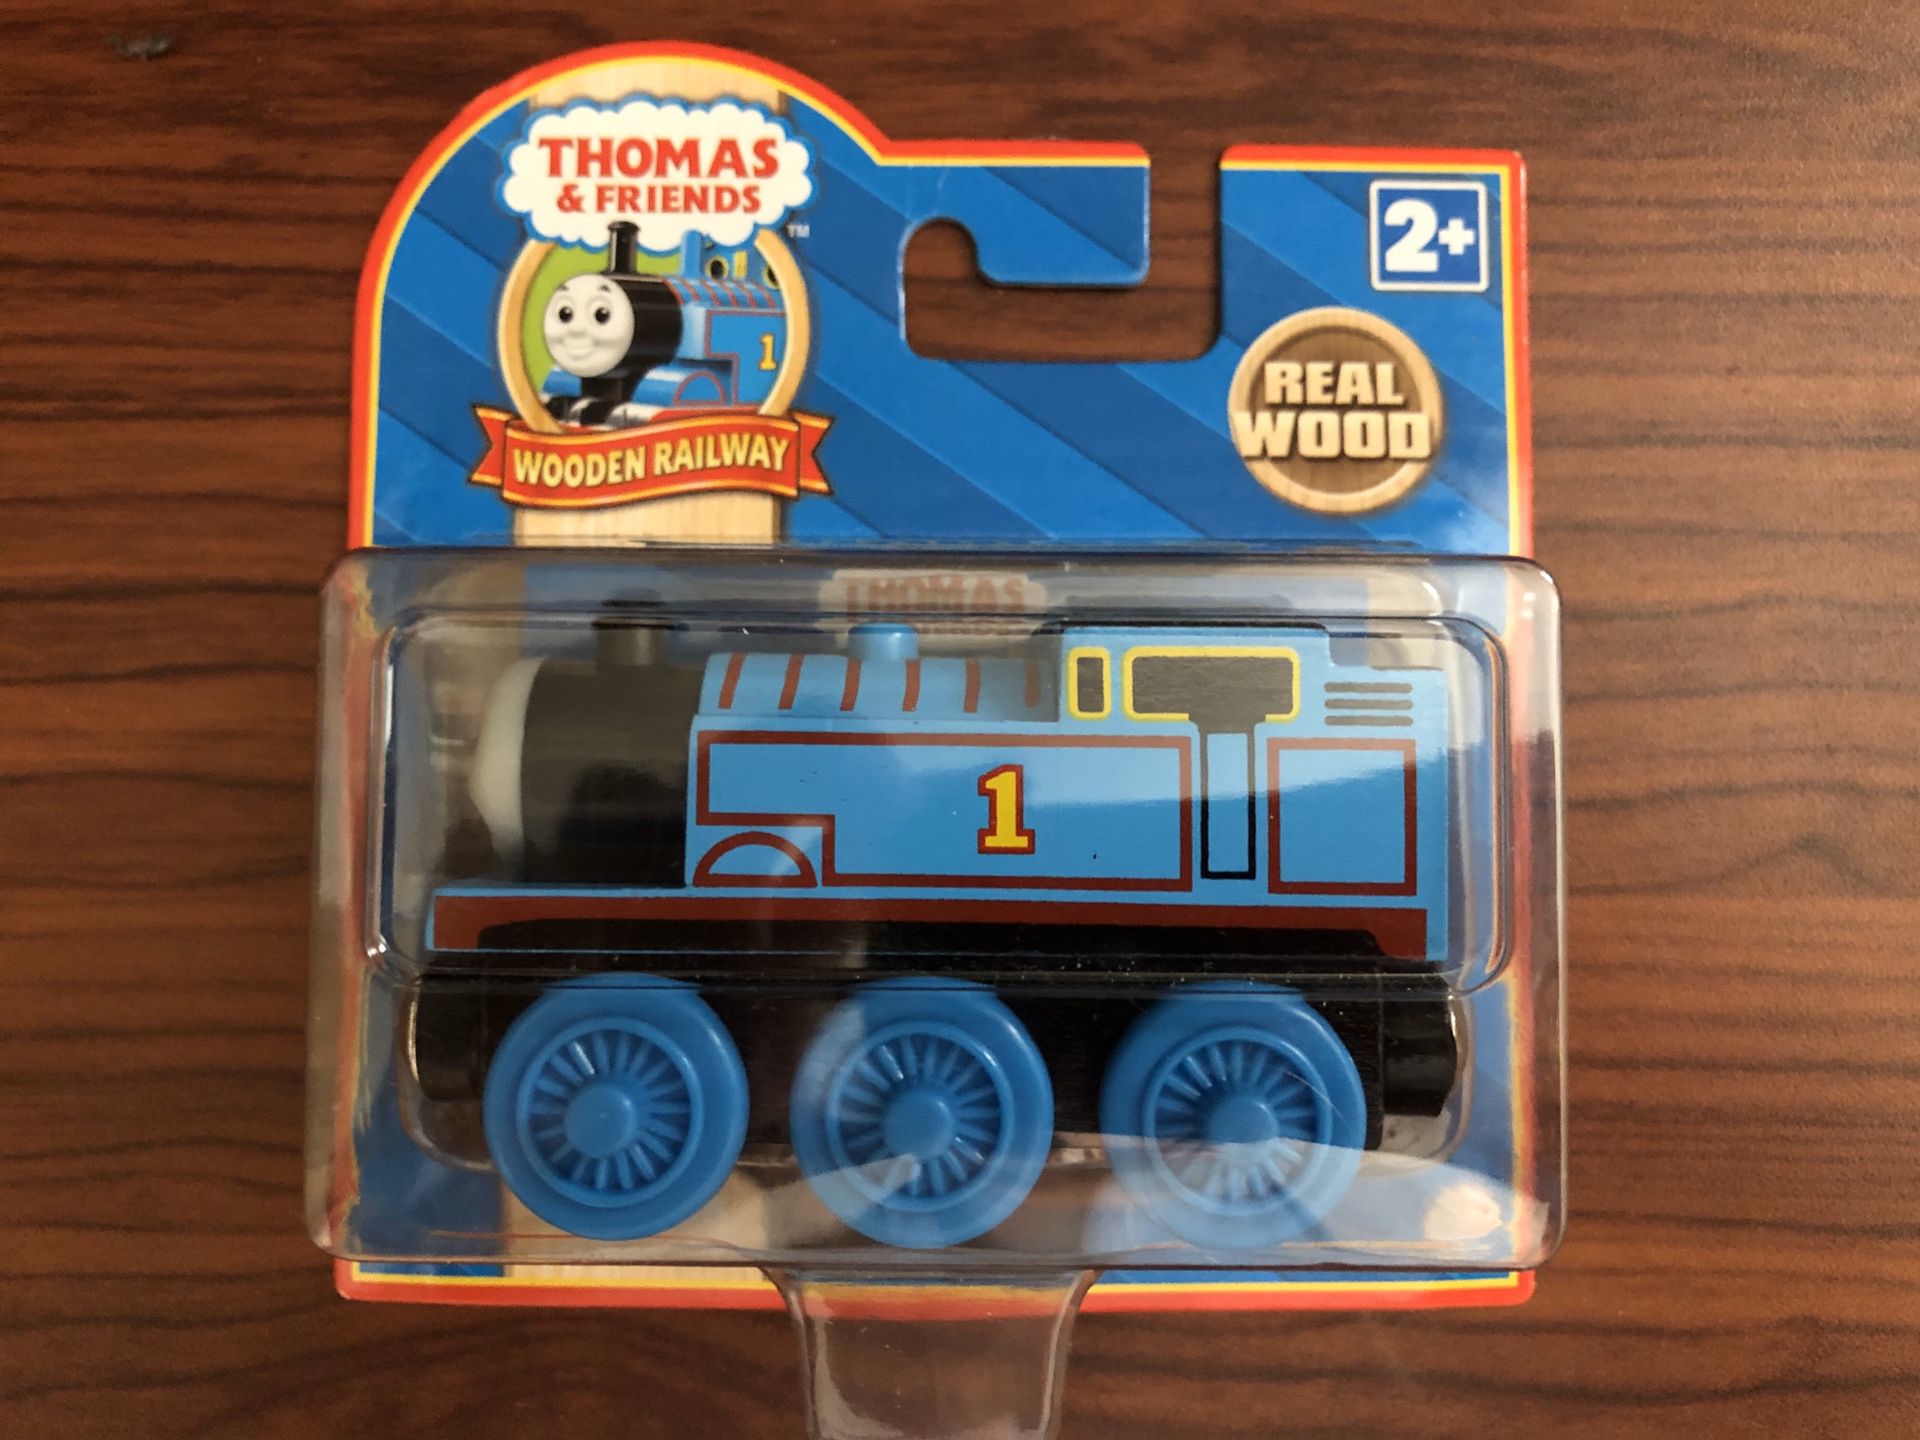 Thomas & Friends Real Wood Thomas Train, New